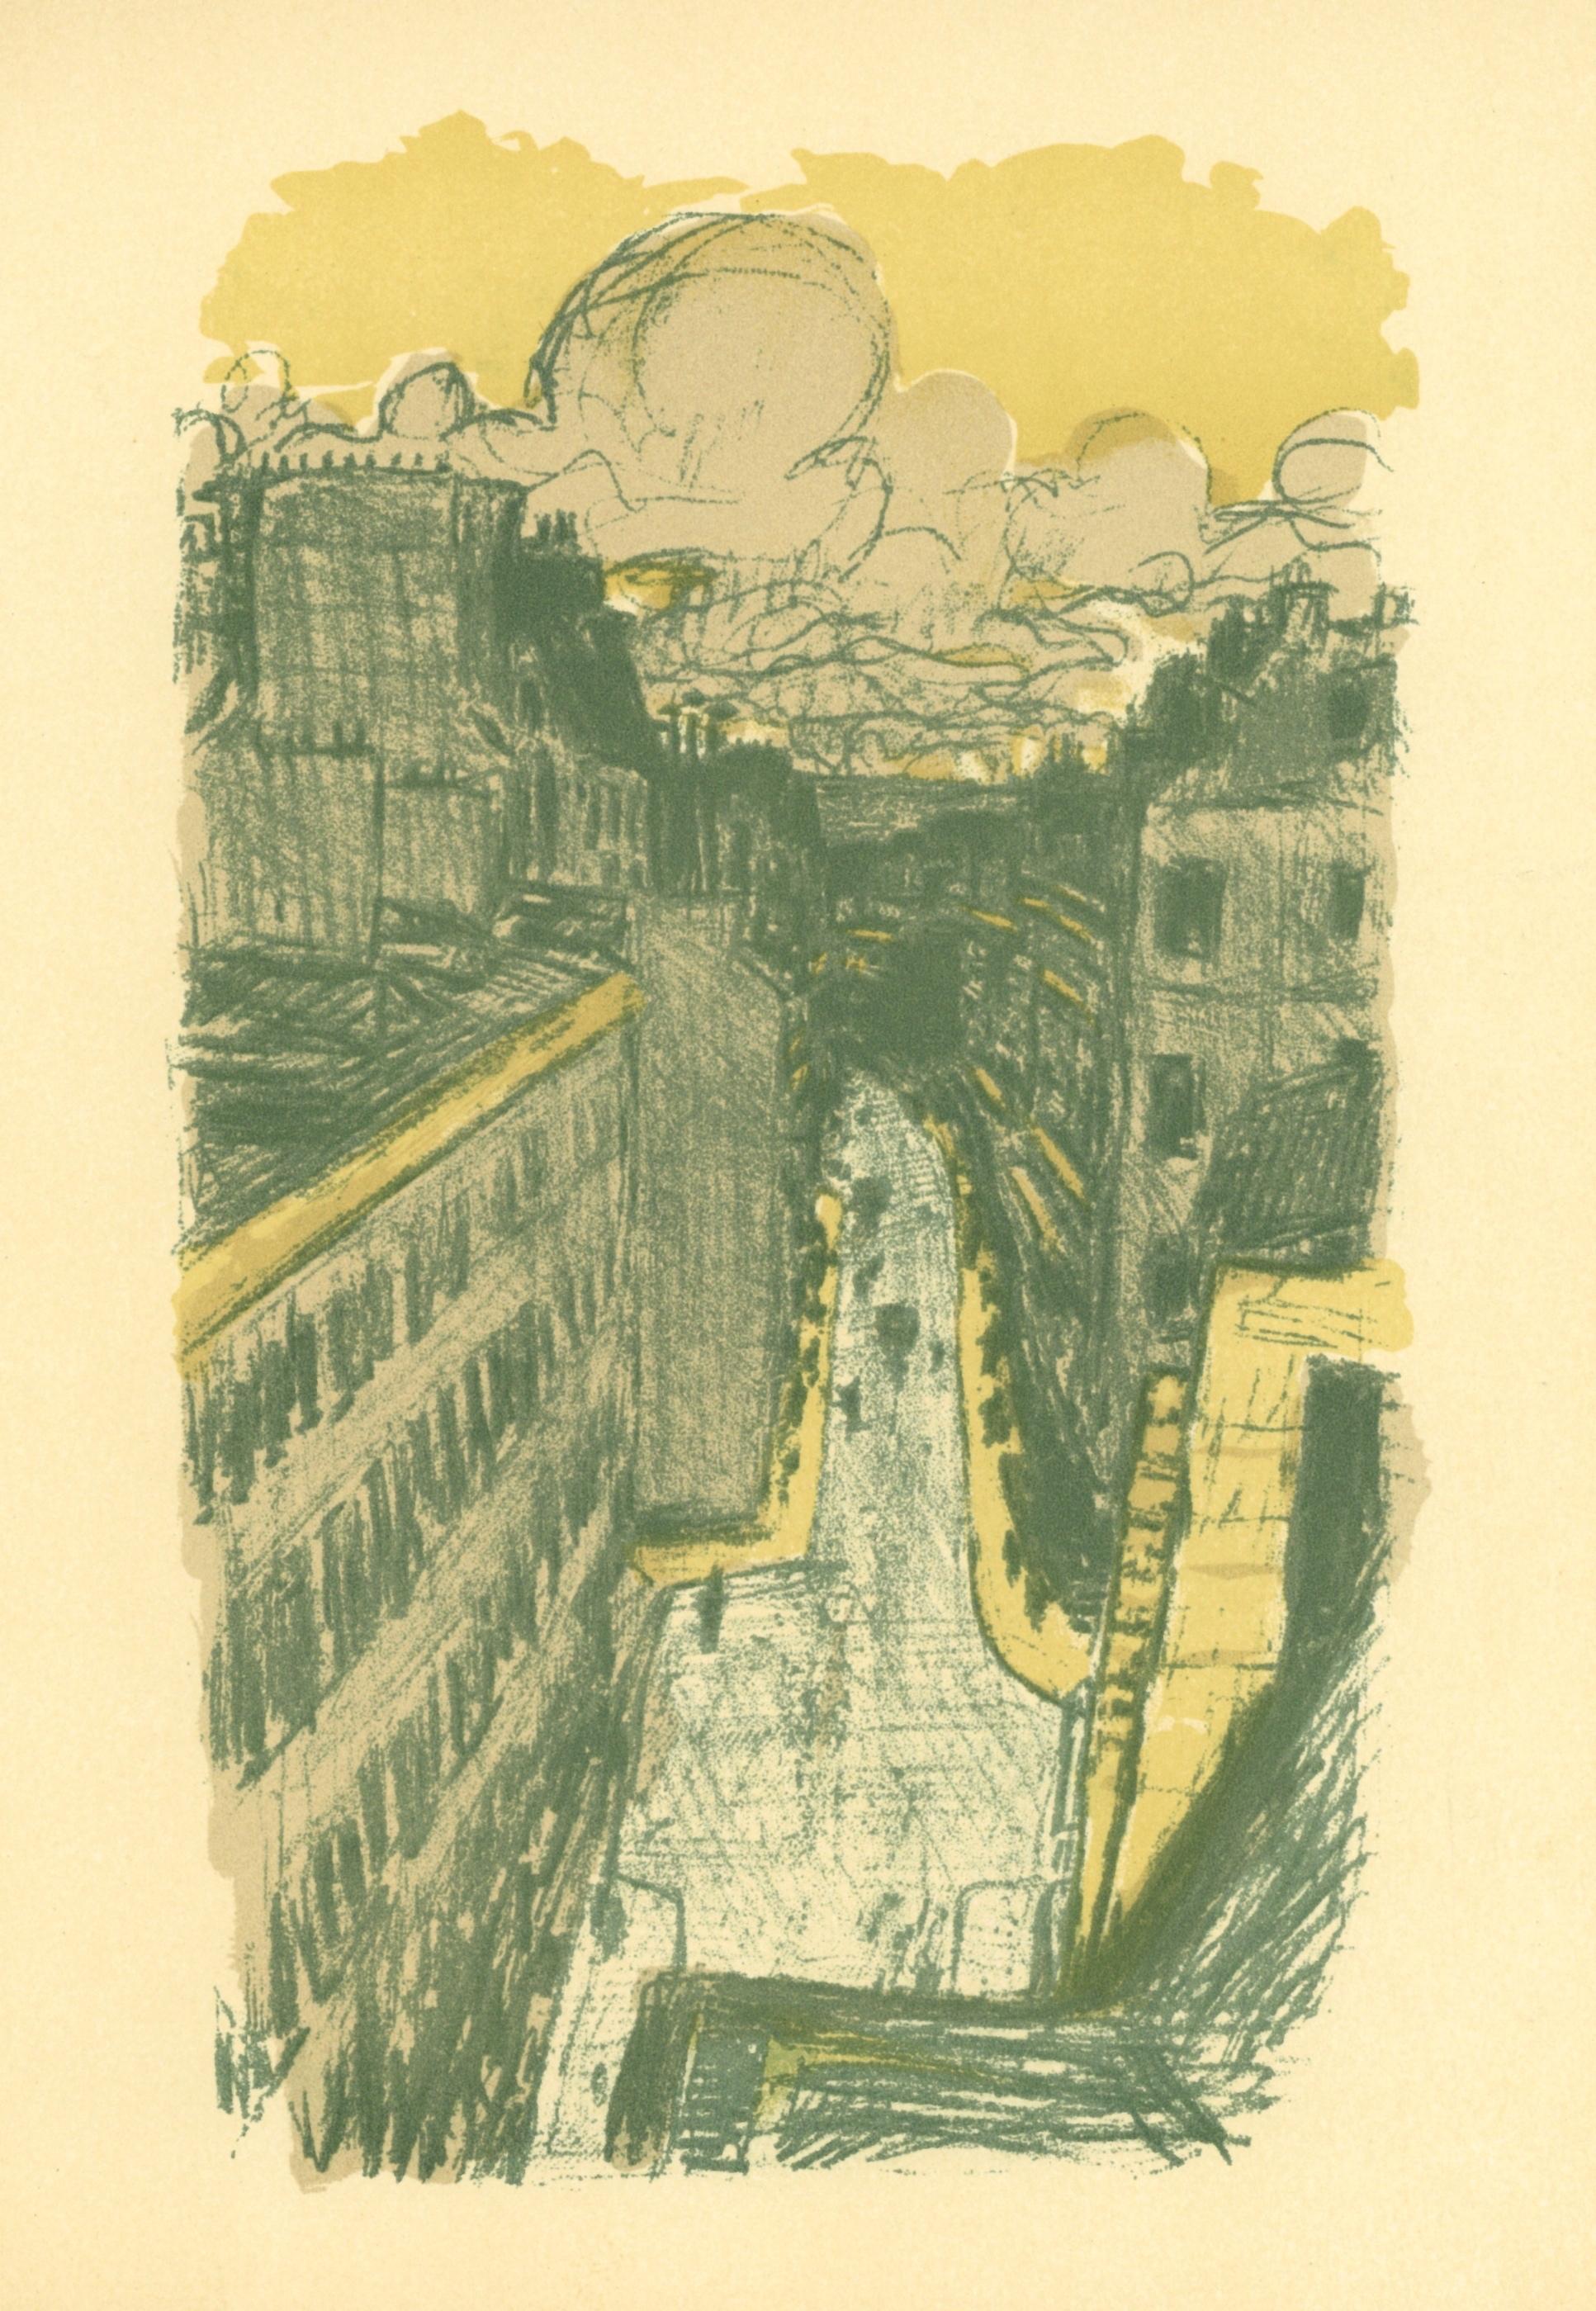 "Rue vue d'en haut" lithograph - Print by (after) Pierre Bonnard